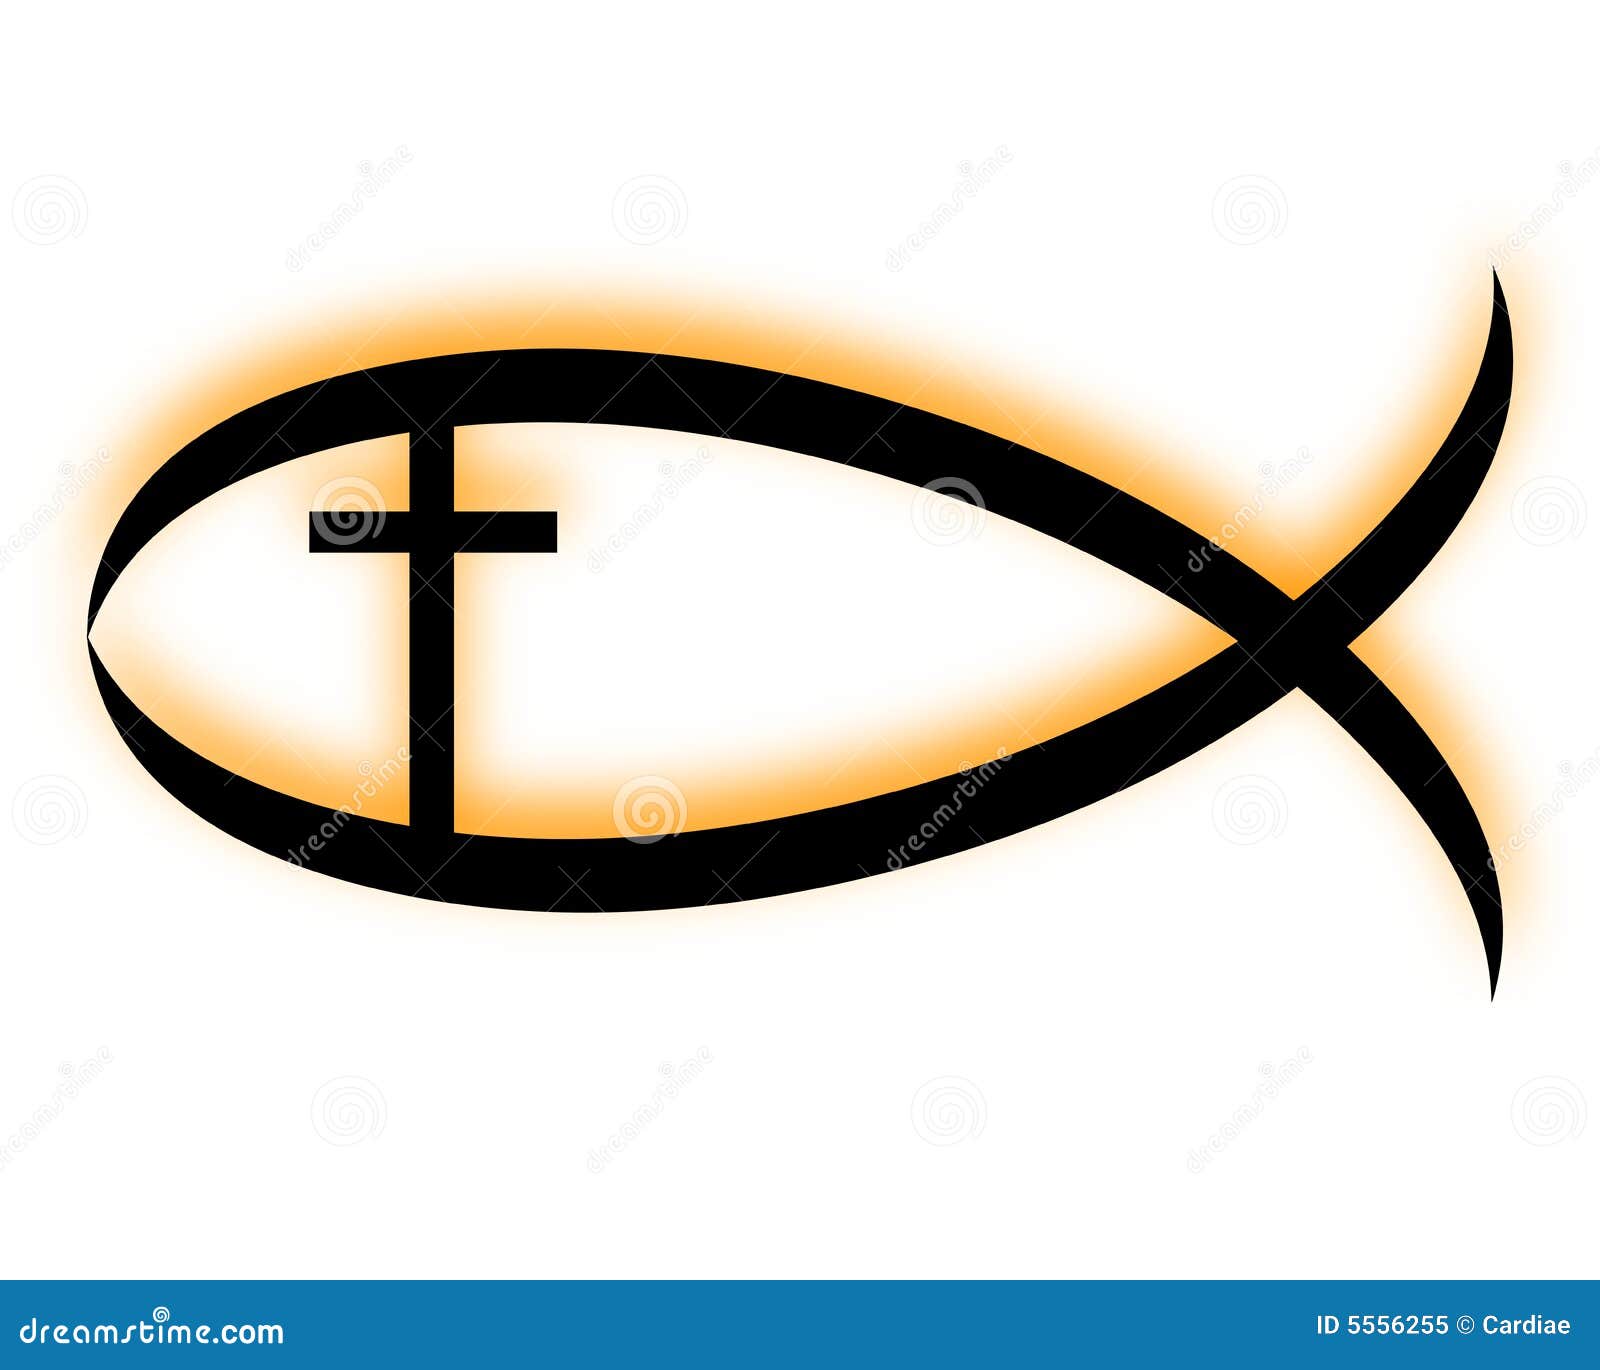 christian fish symbol clipart - photo #22